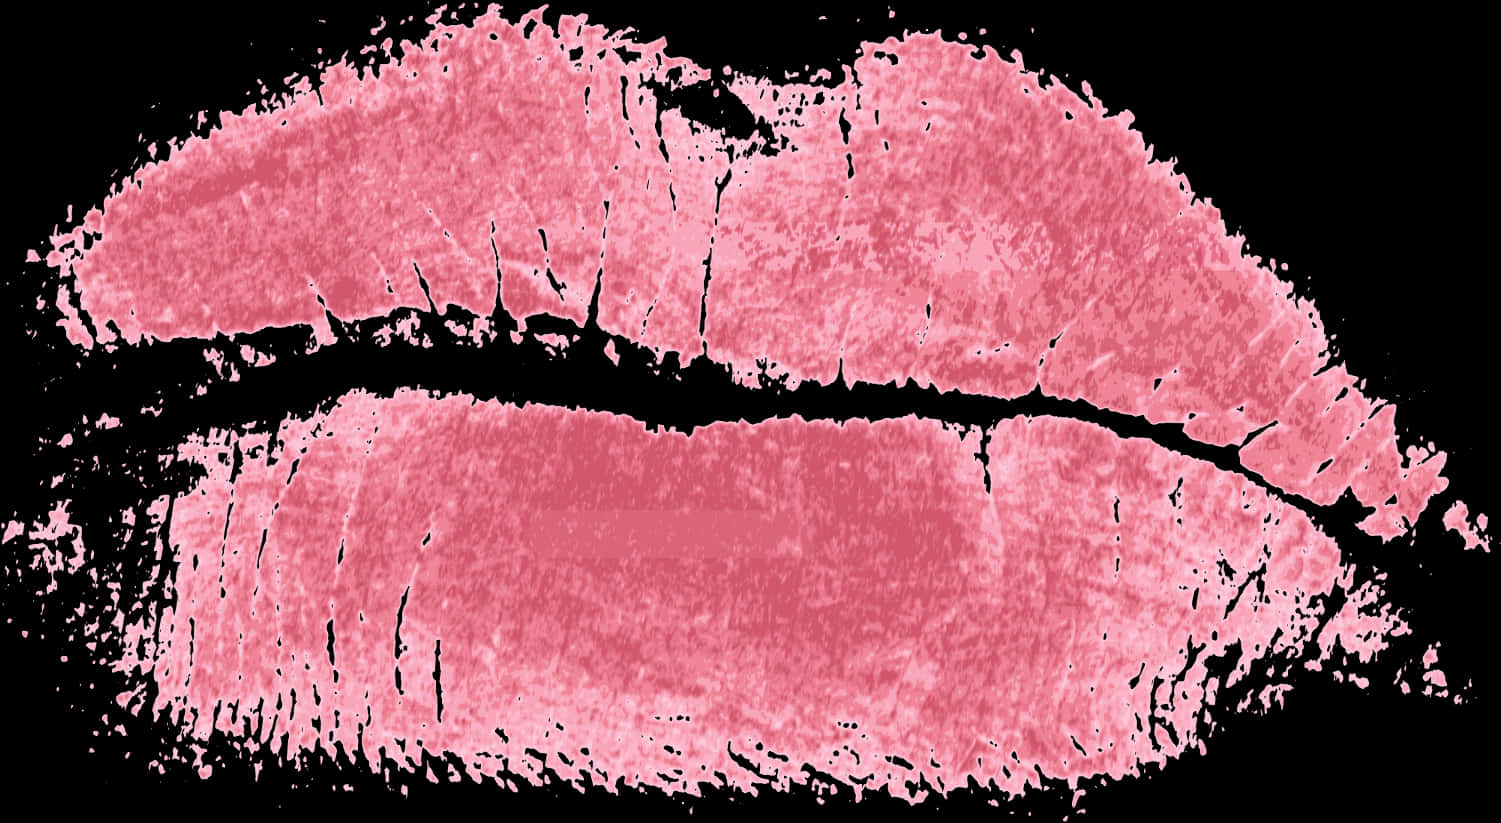 A Close-up Of A Pink Lipstick